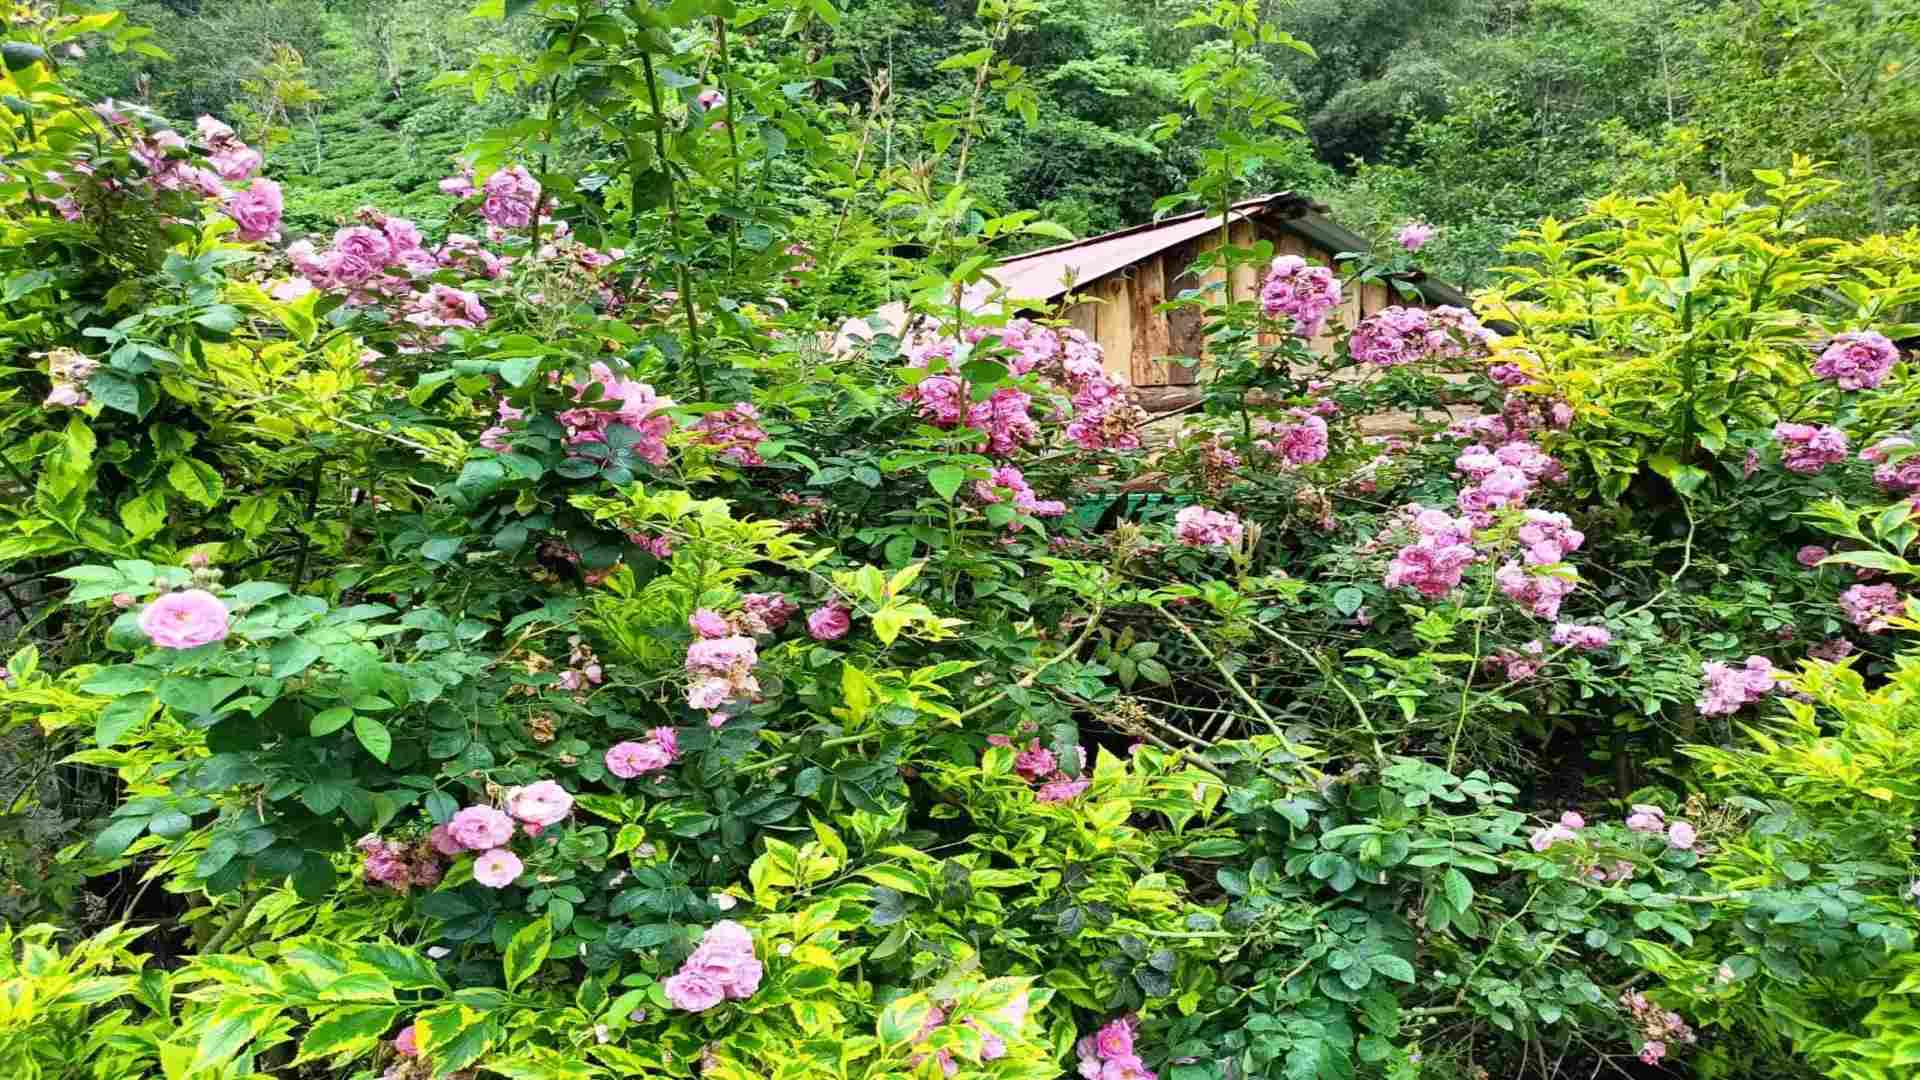 Beautiful flowers in the Tabakoshi Manokamna offbeat homestay, stay here